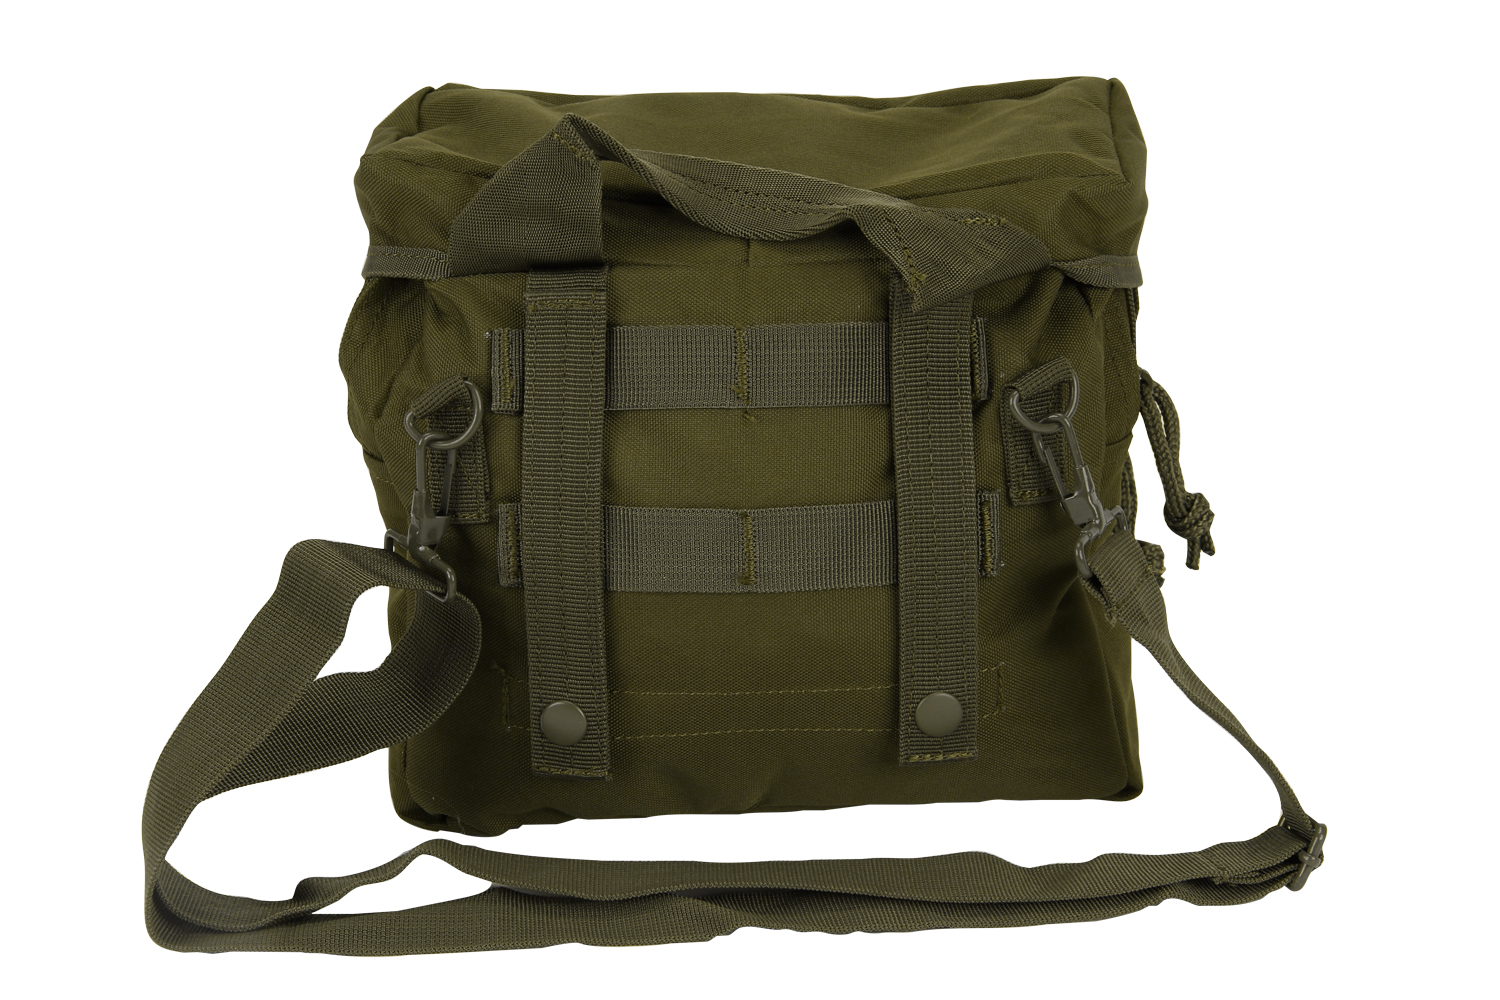 The Universal Medic Bag | North Star Tactical